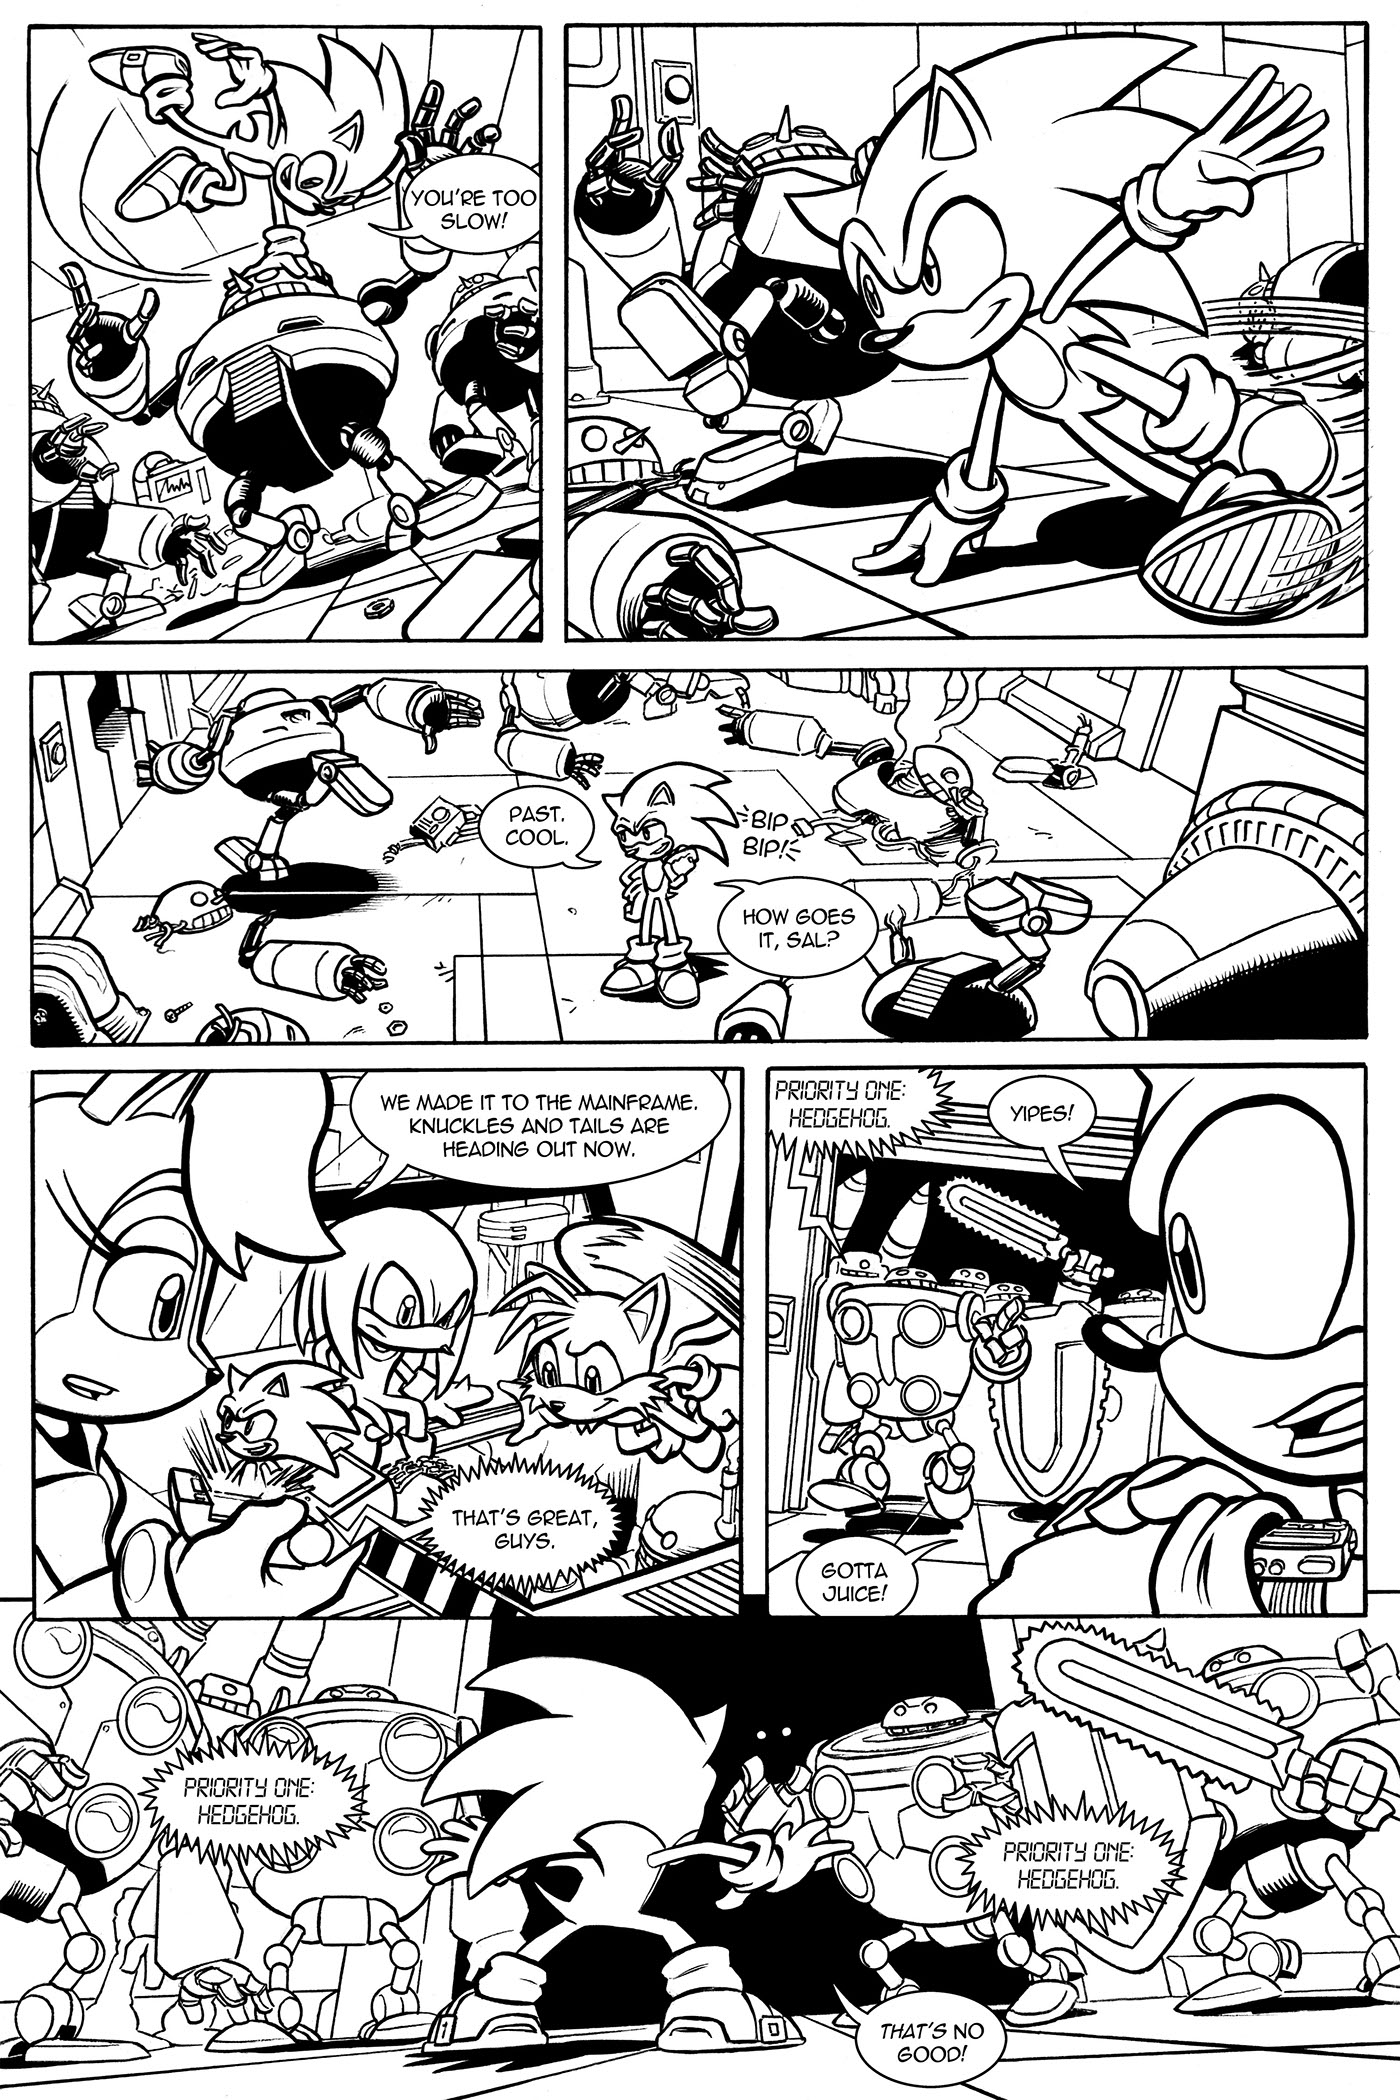 Sonic the Hedgehog sonic comics cartoon comic SEGA Archie Comics sample pages pencils inks Planet Mobius Princess Sally Knuckles Tails robotnik